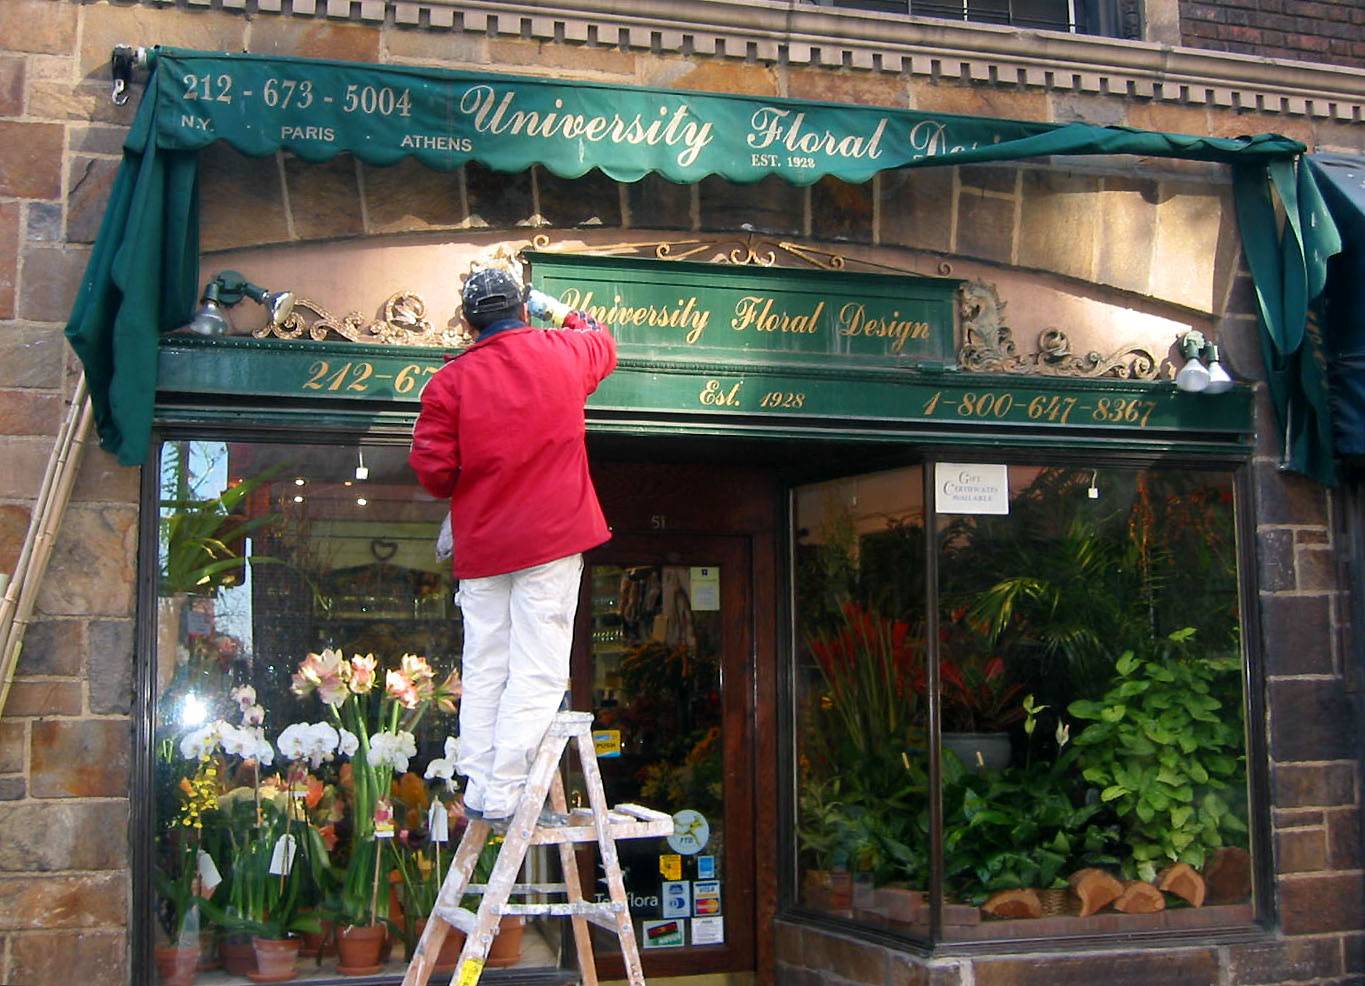  University Floral Design Shop at 10th Street